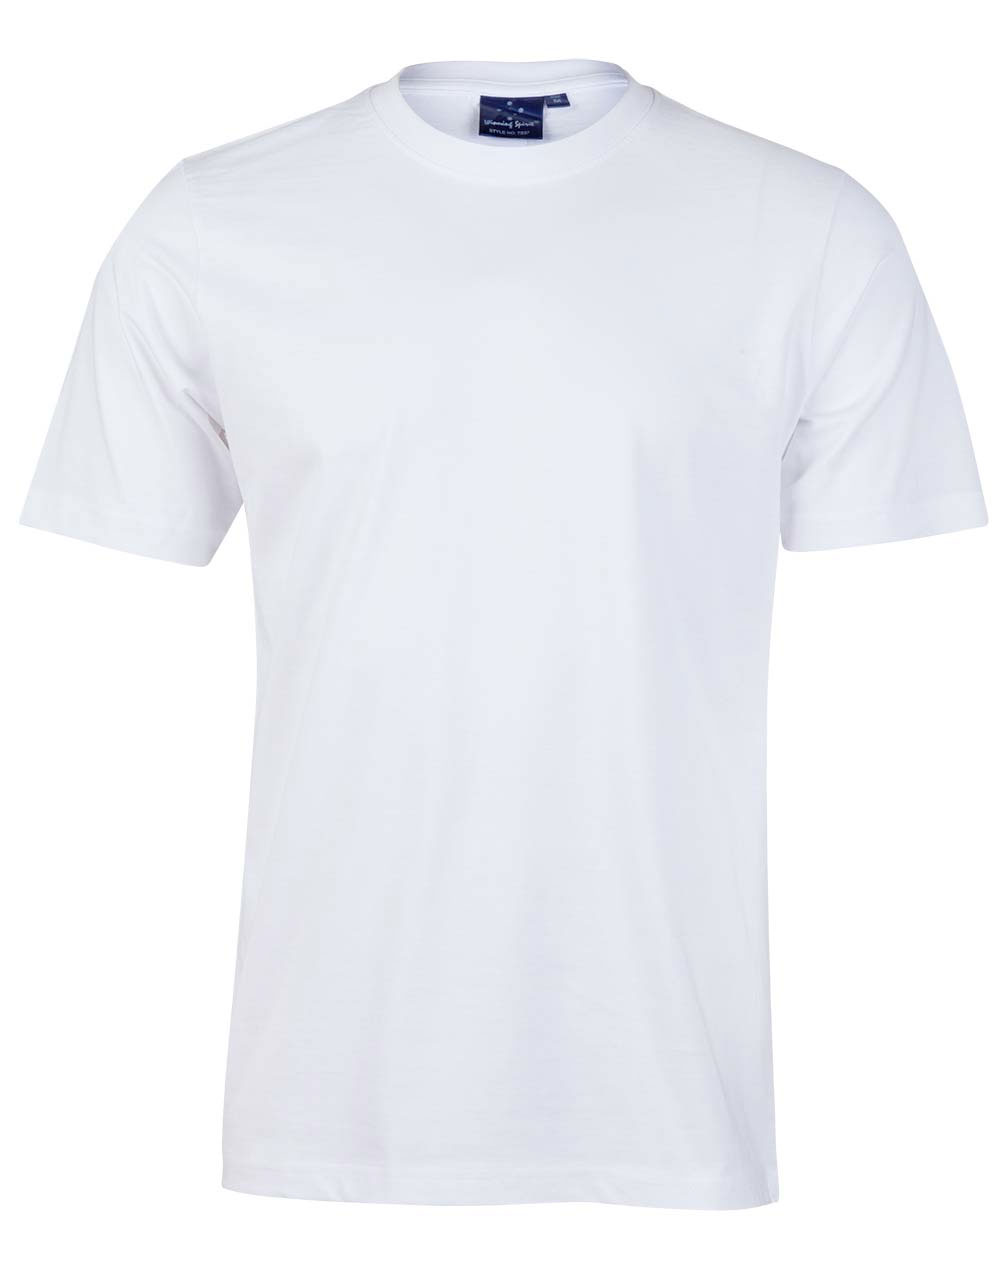 Custom Made (White) Budget Unisex Crew Neck T-Shirts Mens Online Perth Australia